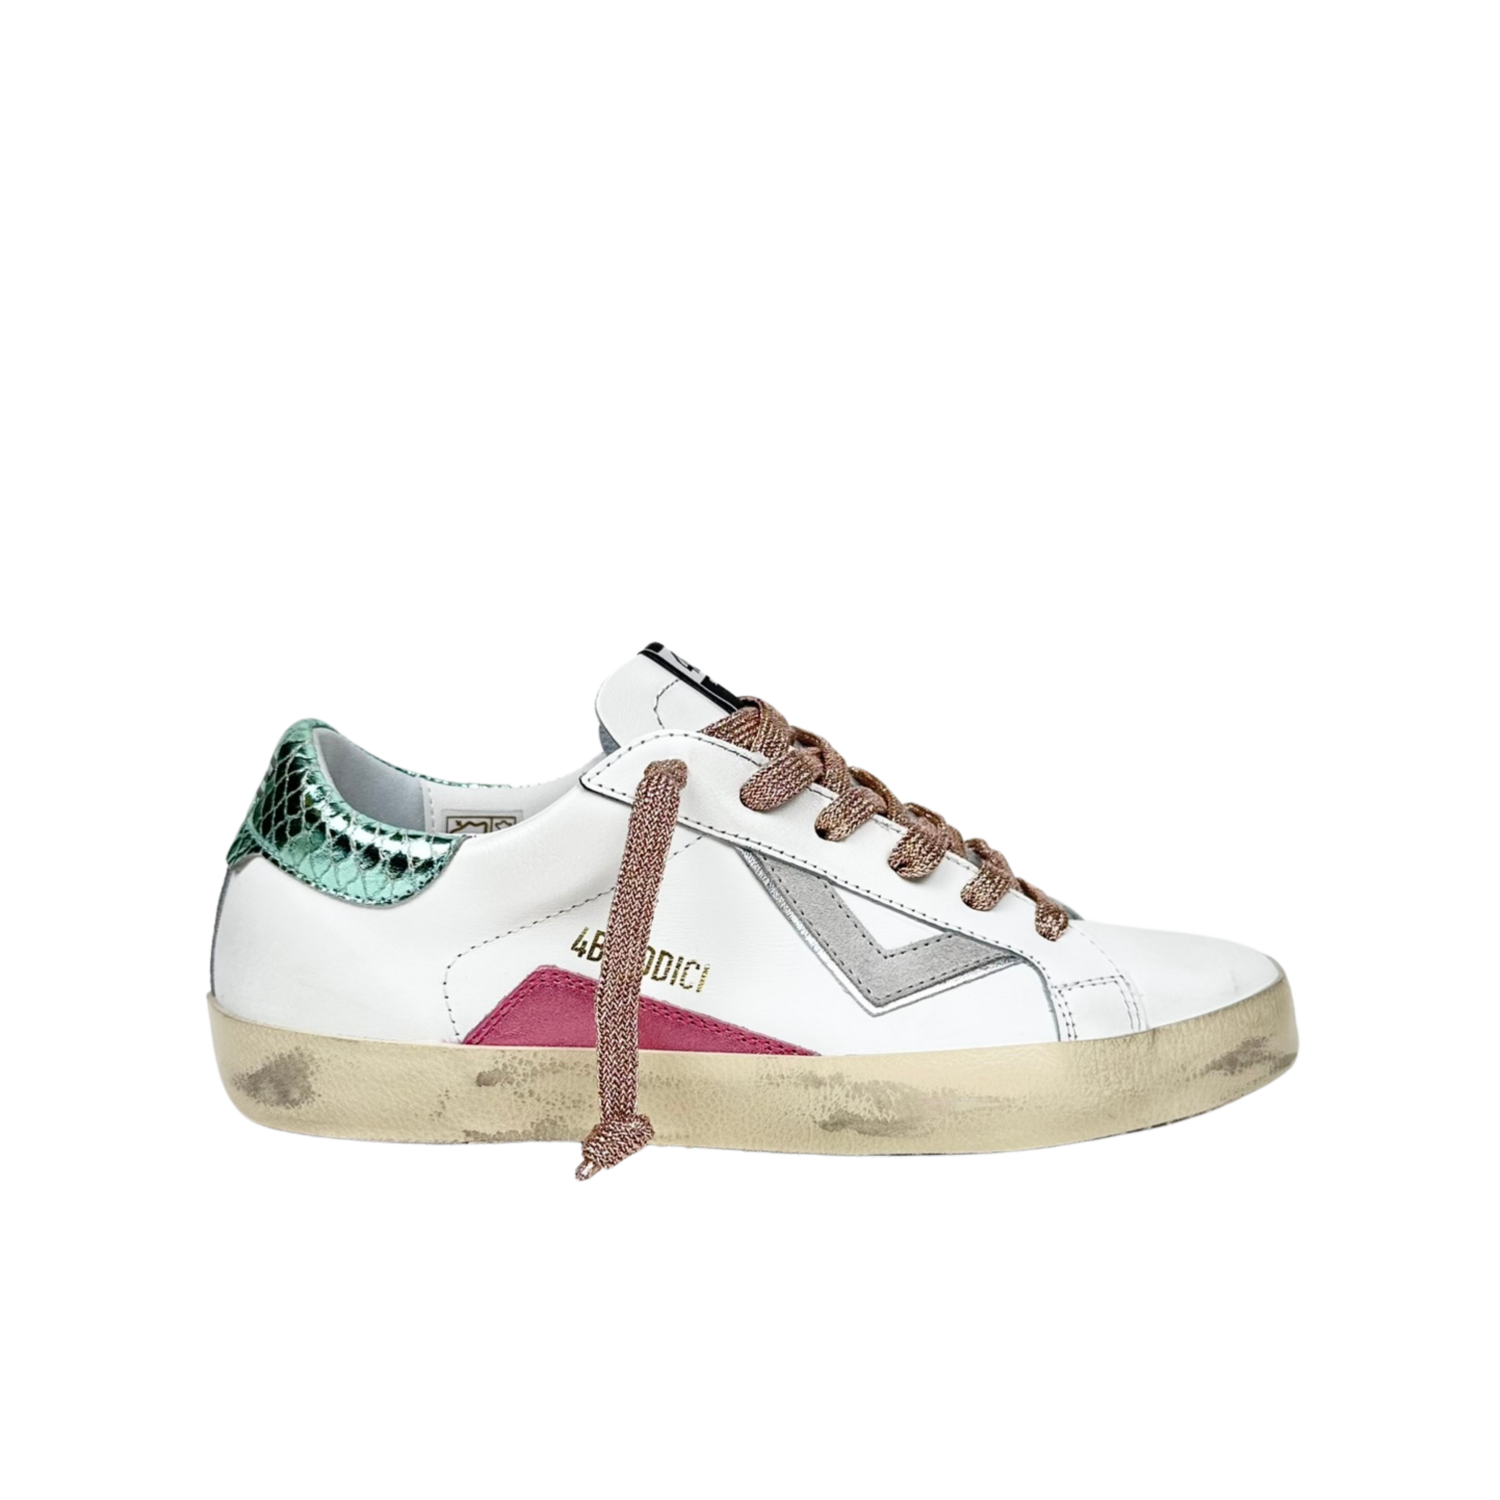 4B12 Suprime Bianco Smeraldo Sneakers Donna